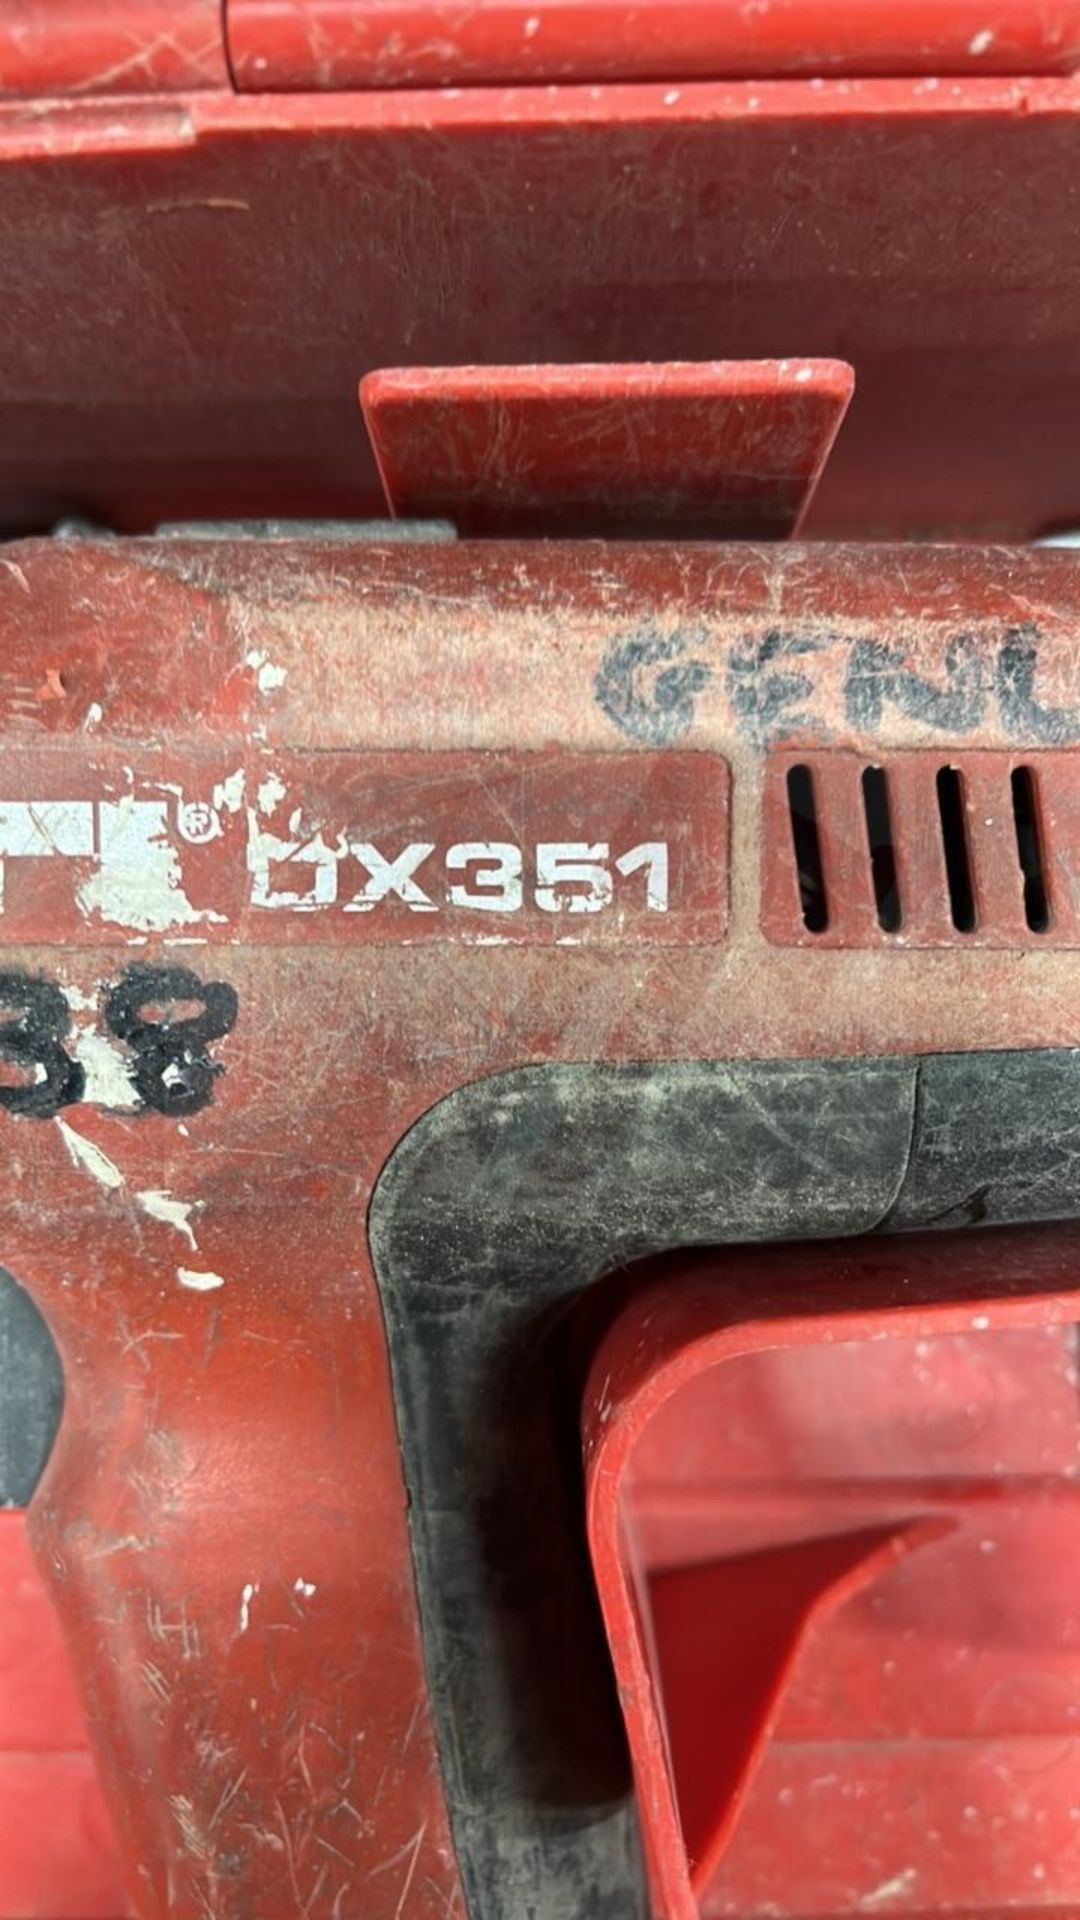 Hilti DX351 Powder Actuated Nail Gun - Image 2 of 2